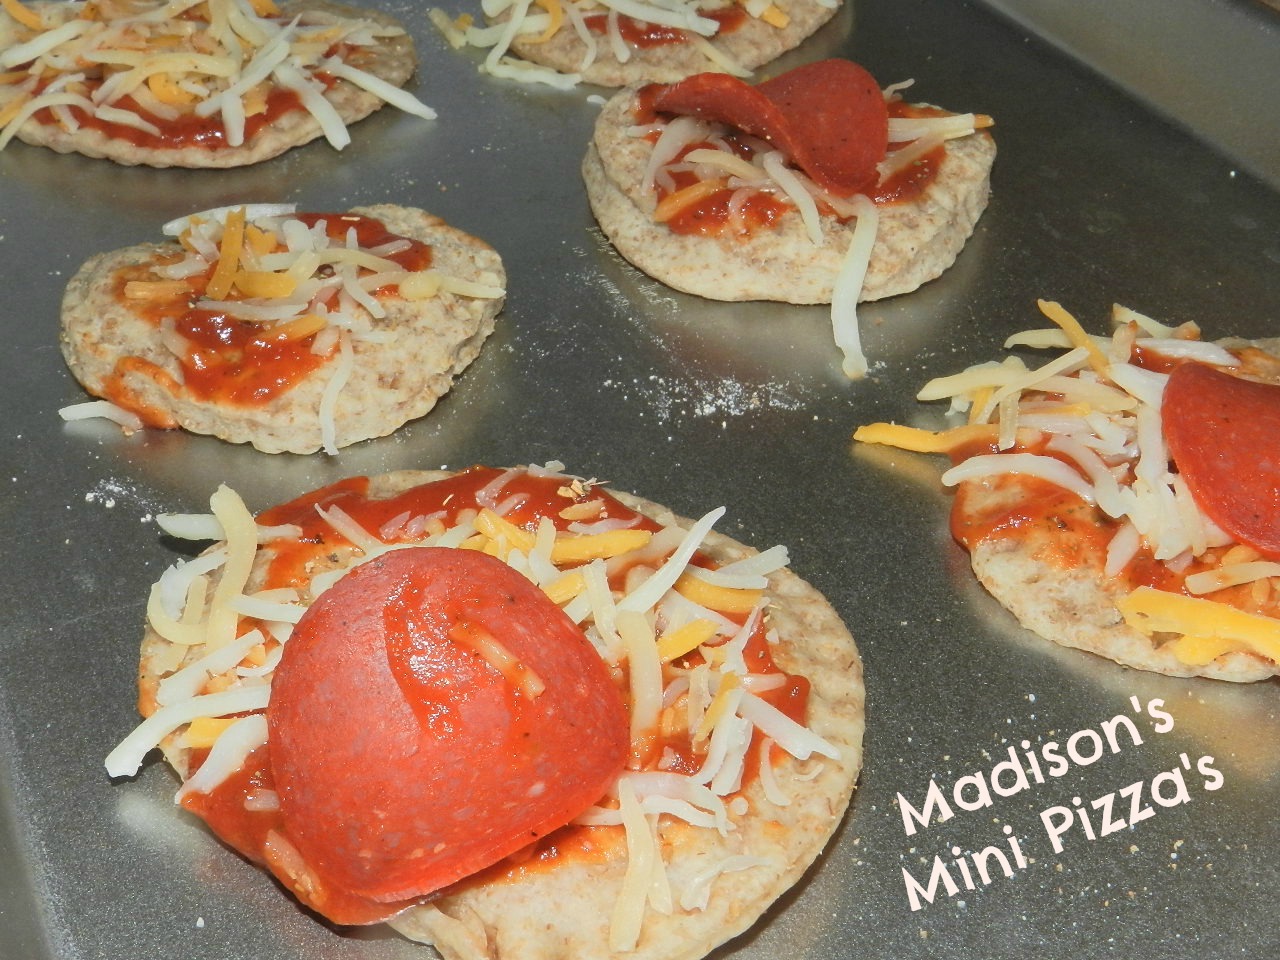 Madison’s Mini Pizza’s